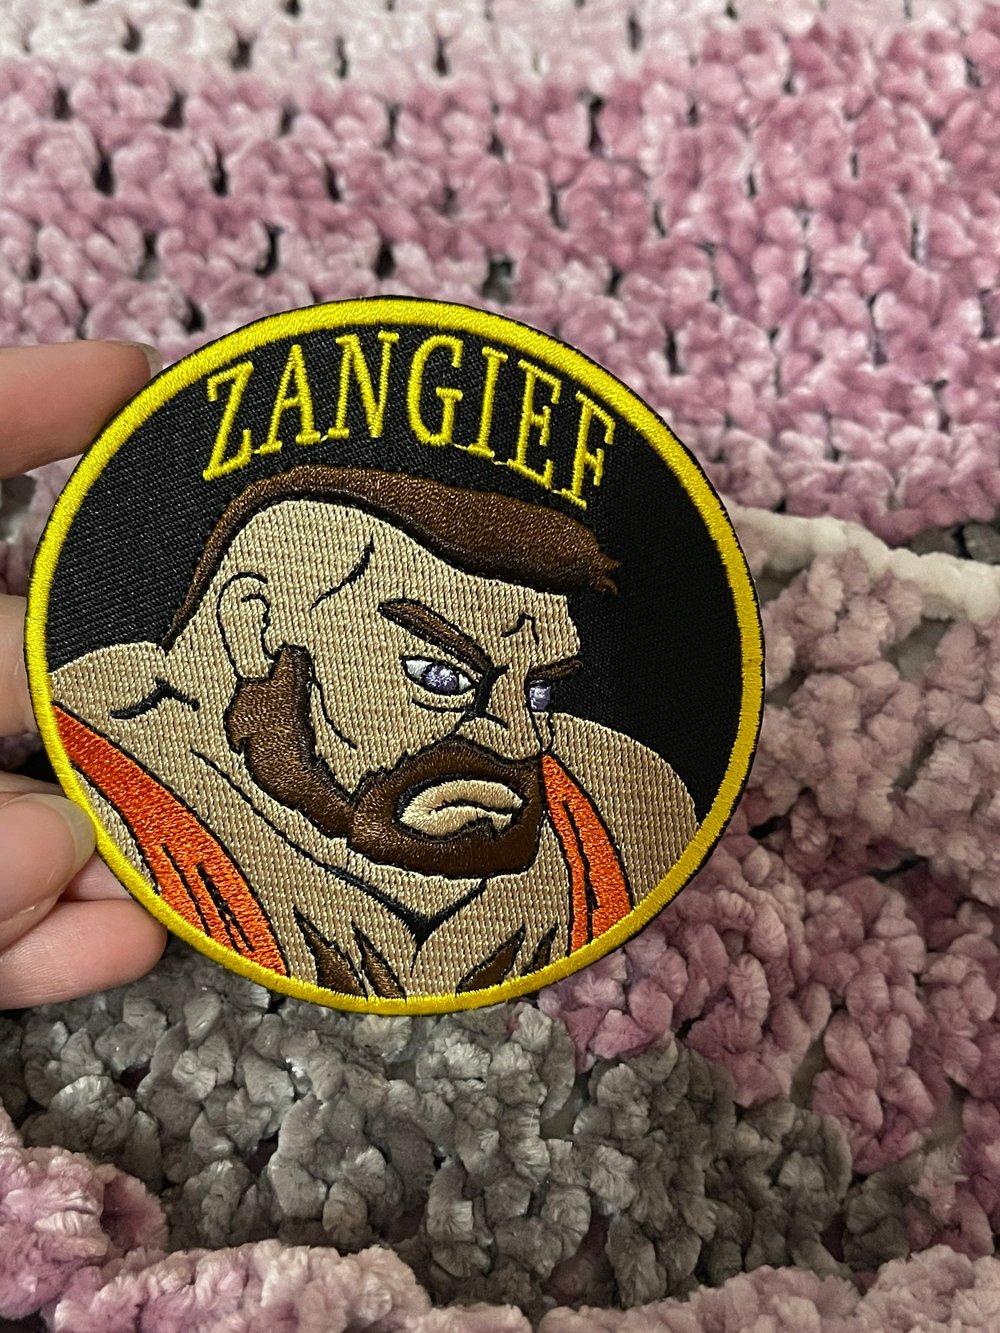 Zangief - Retro Street Fighter 3.5 inch wide iron on patch